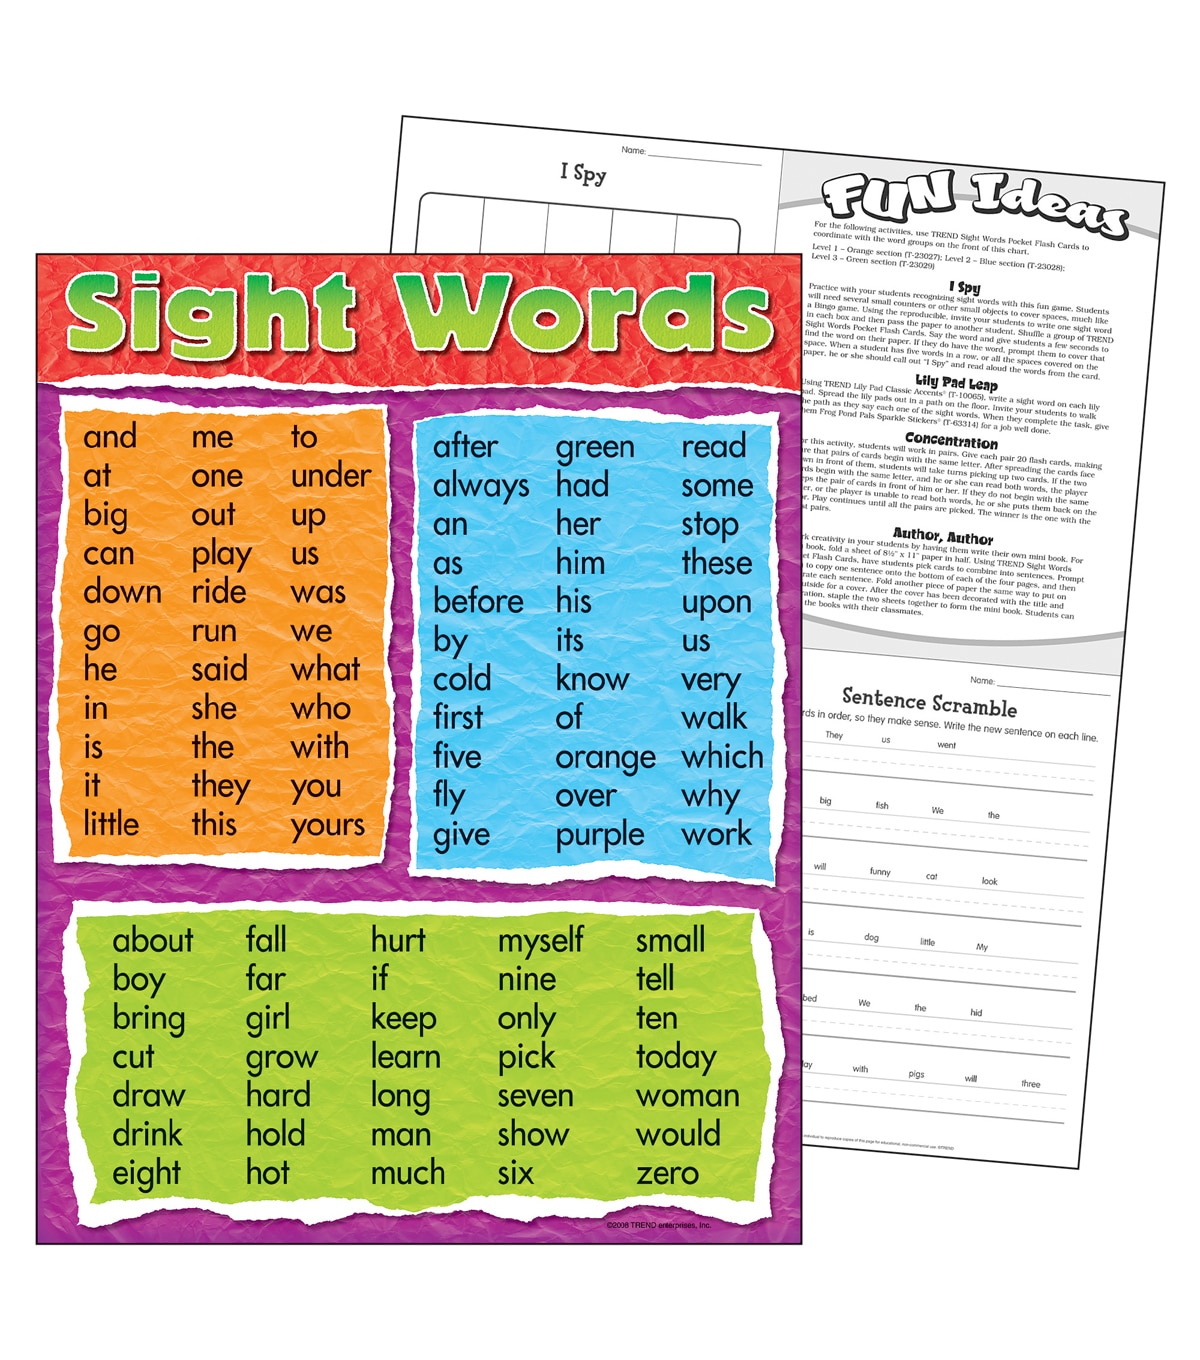 Sight Words Chart